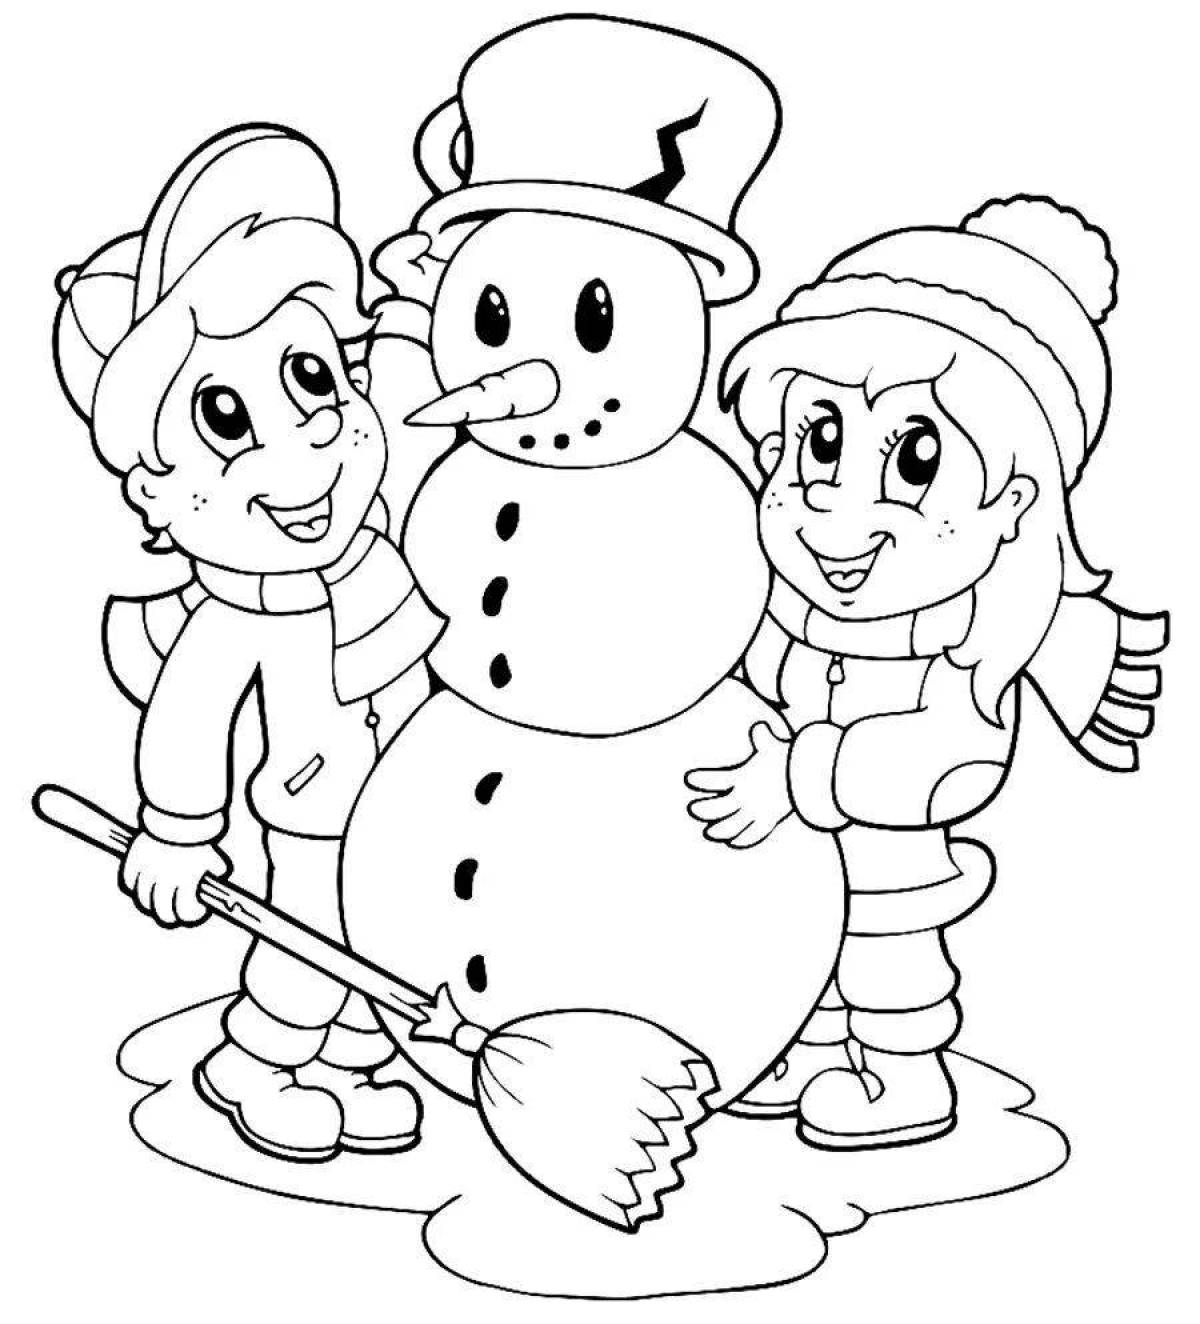 Holiday snowman coloring